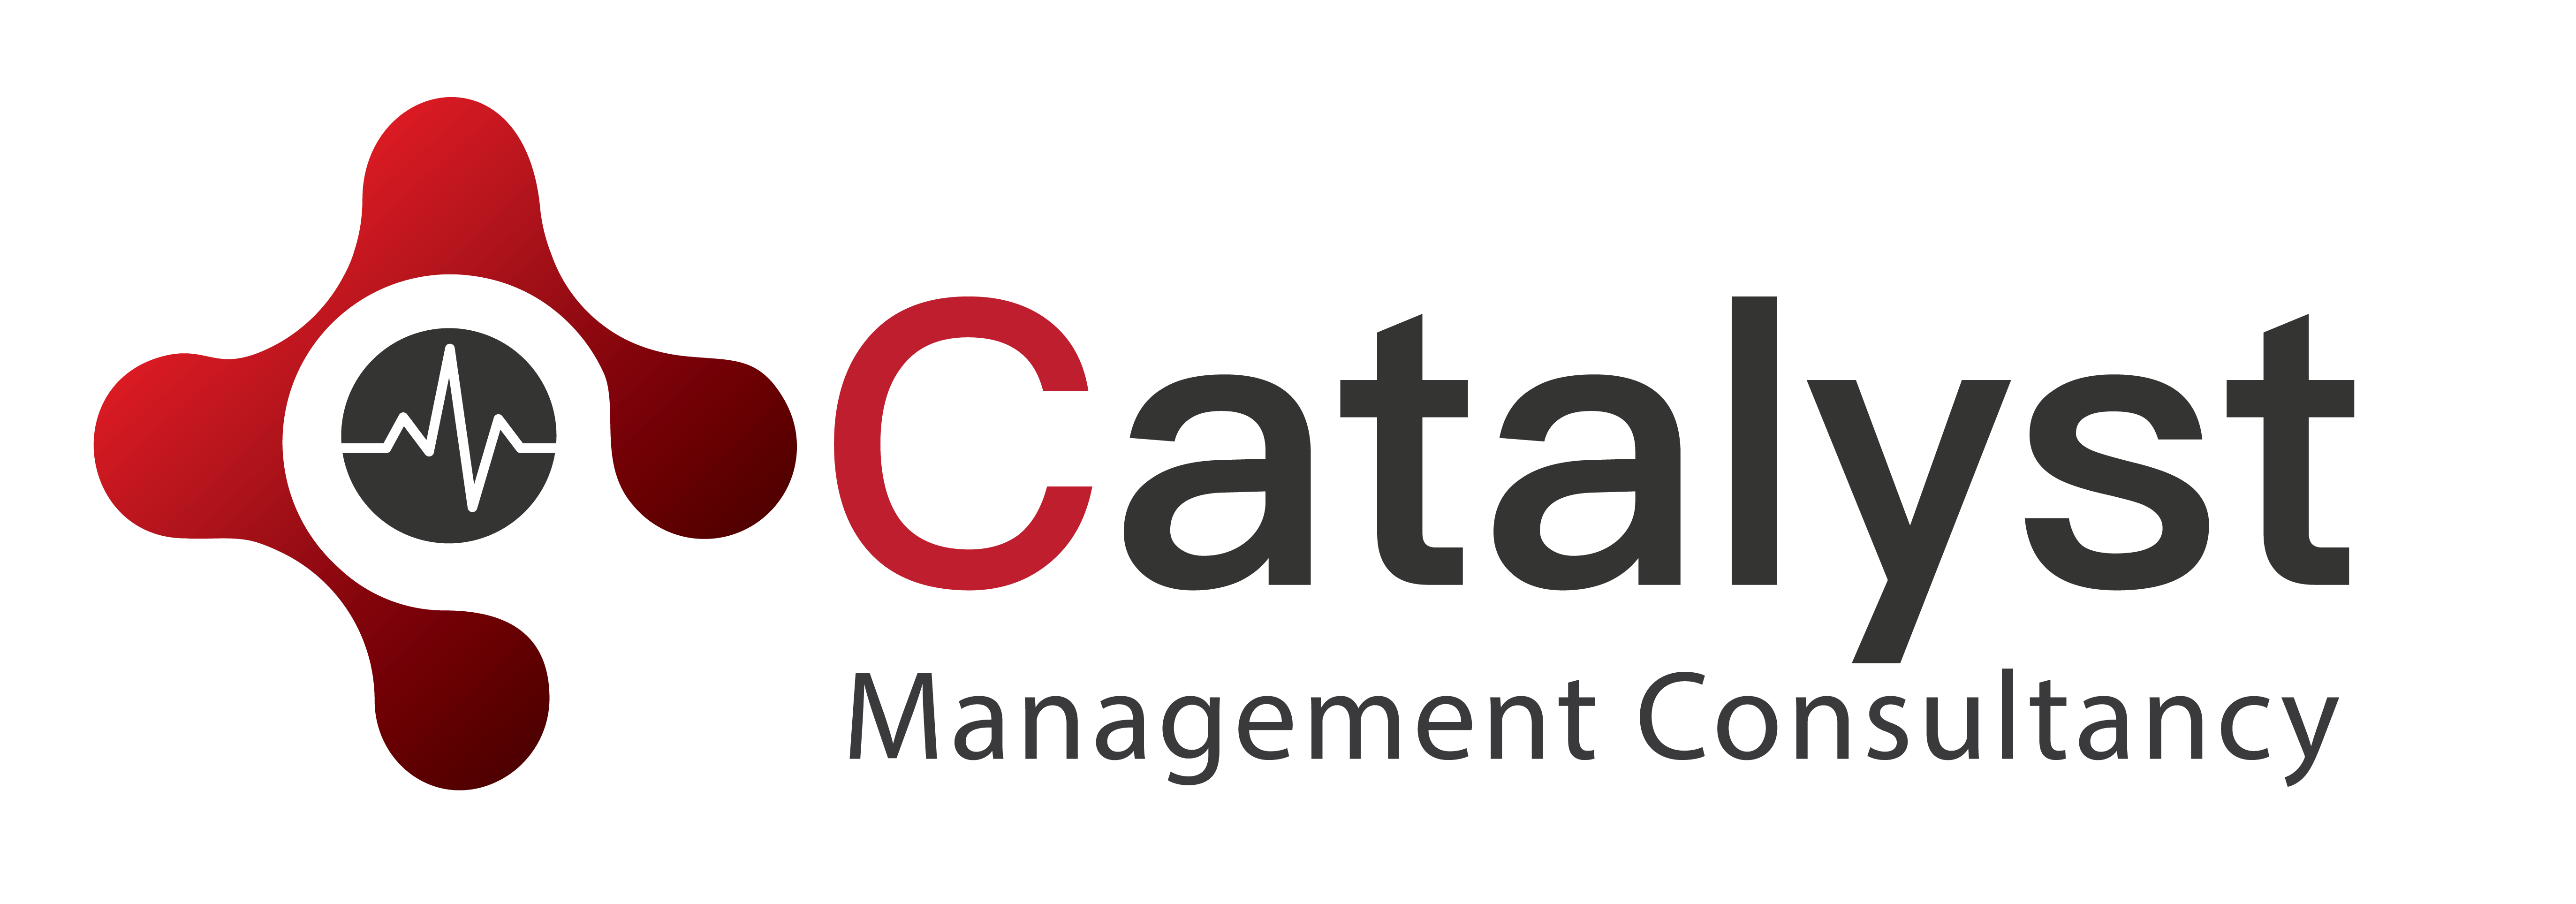 Catalyst Management Consultancy Logo